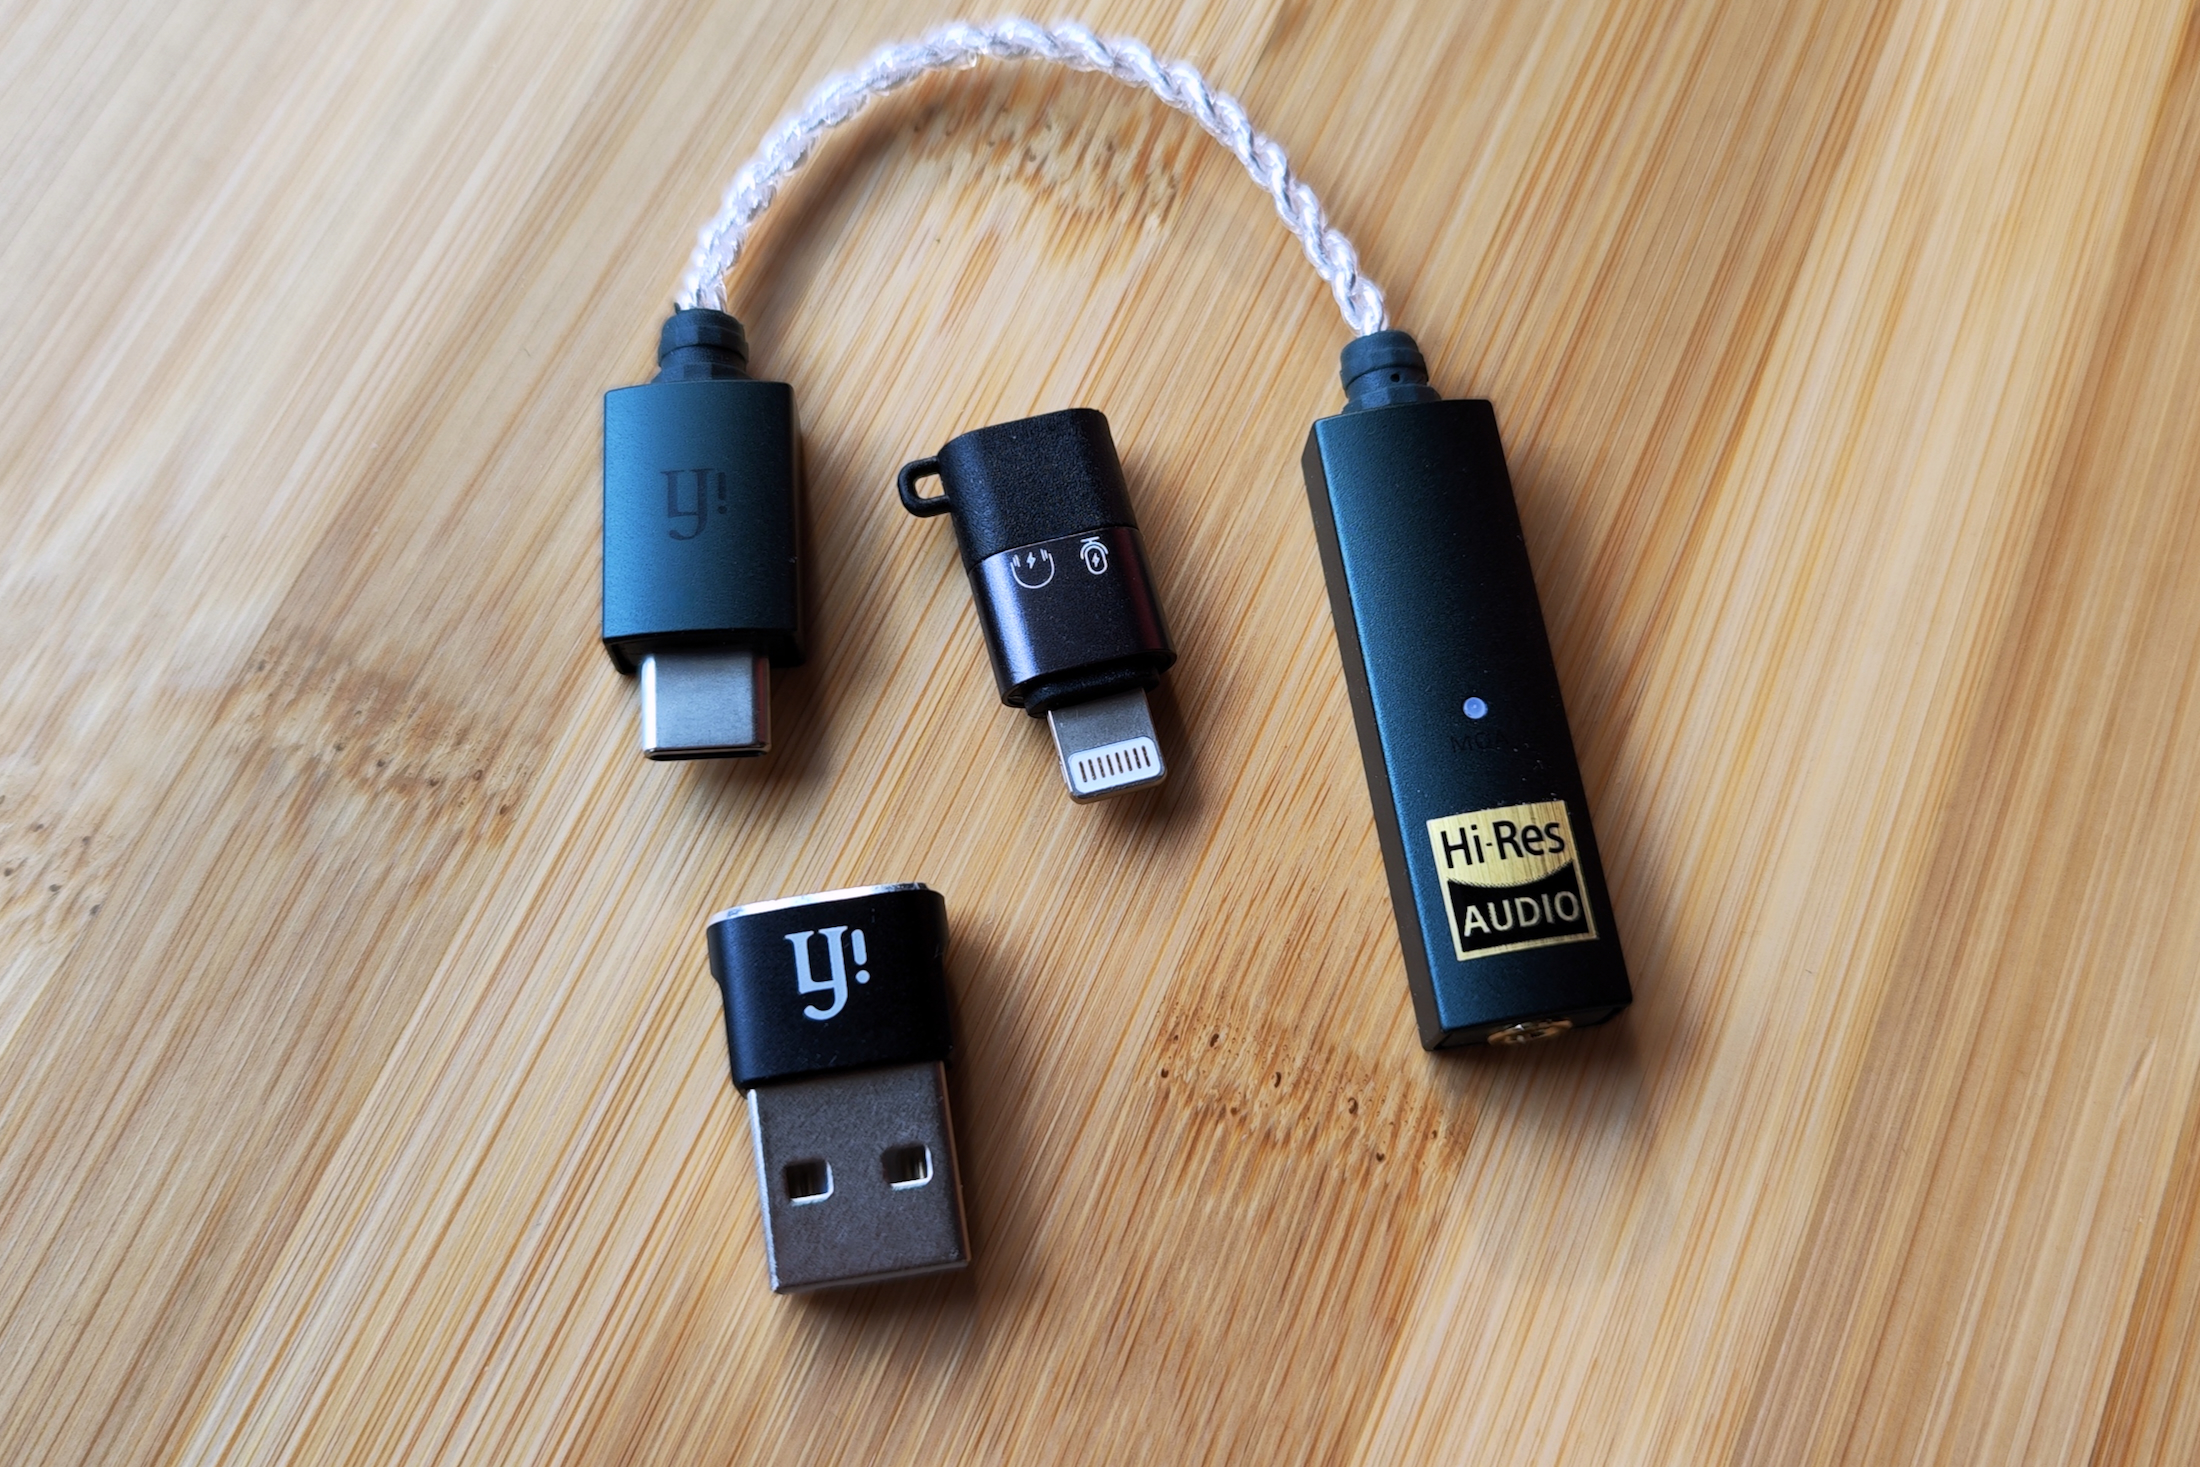 iFi audio GO link USB DAC and Headphone Amp